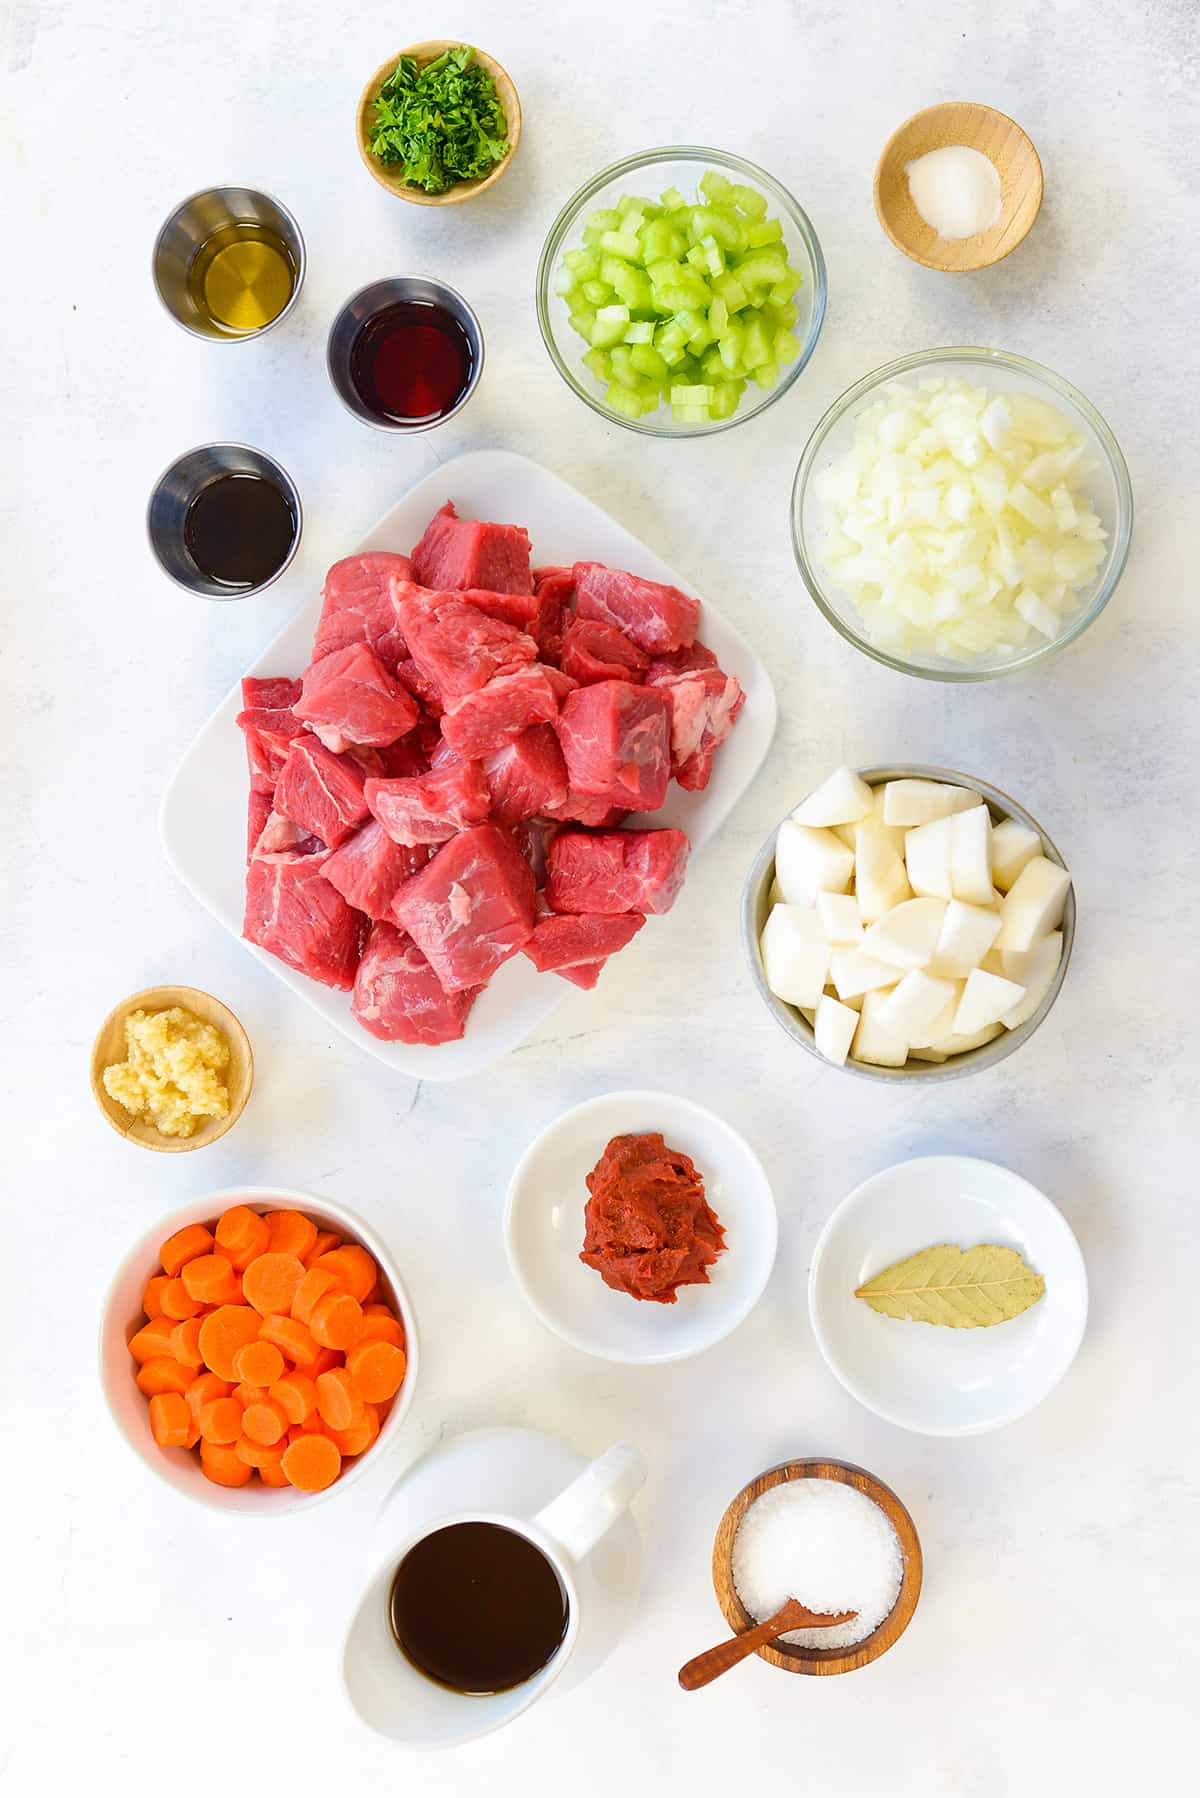 Ingredients for crockpot beef stew recipe.